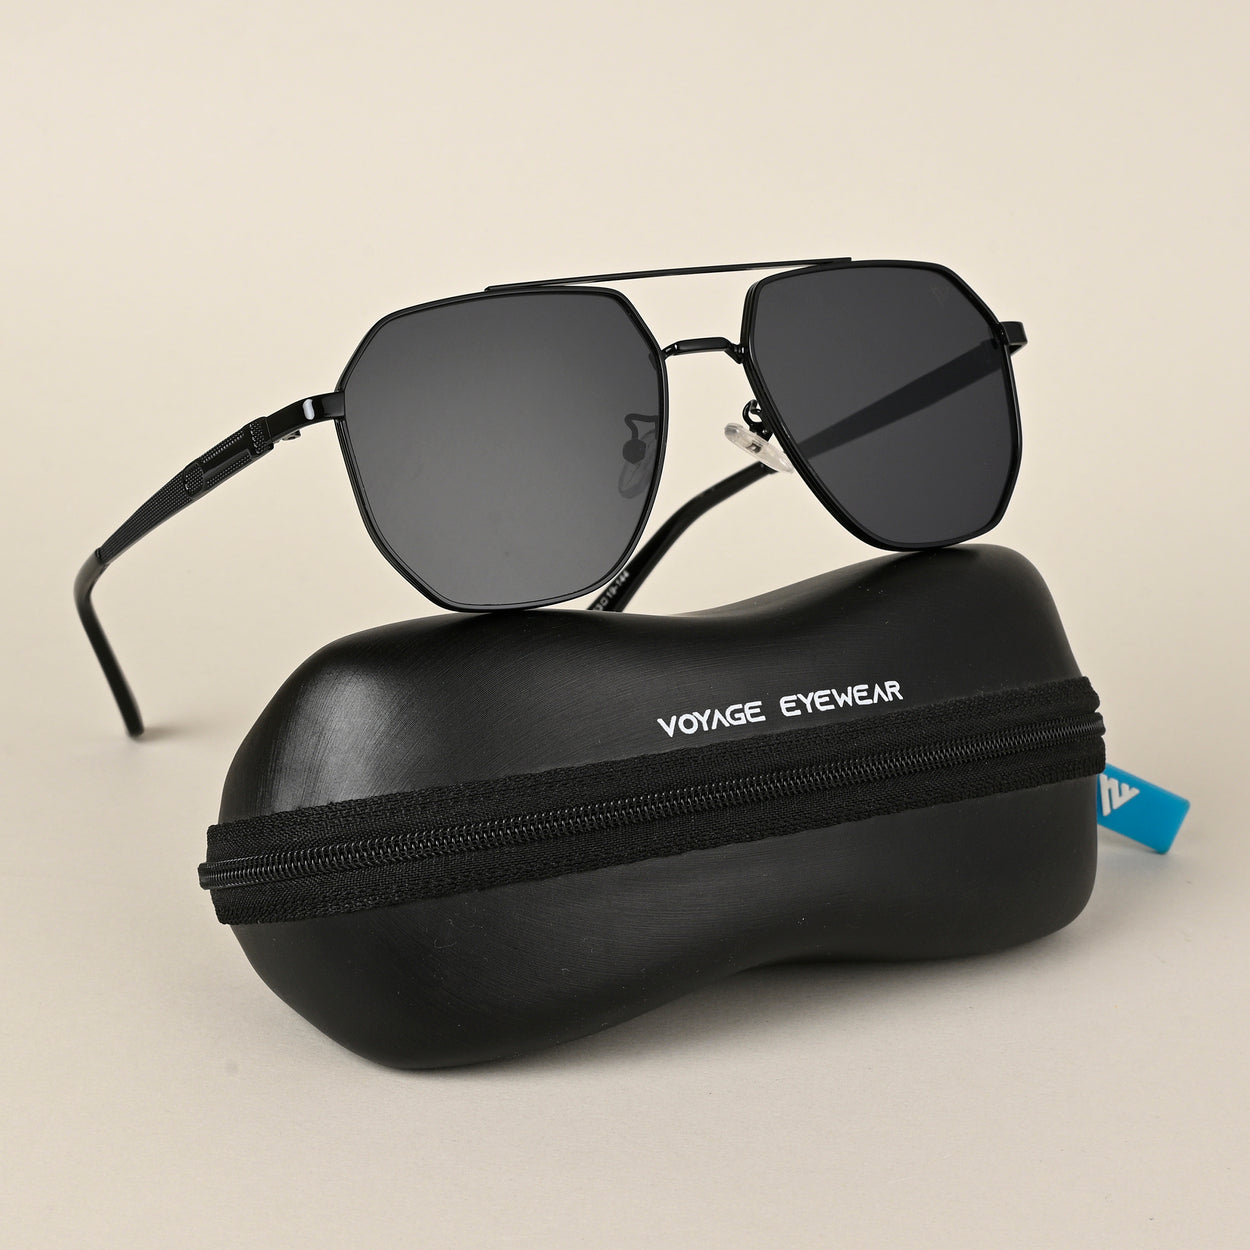 Voyage Black weyfarer Sunglasses for Men & Women (8949MG4324)